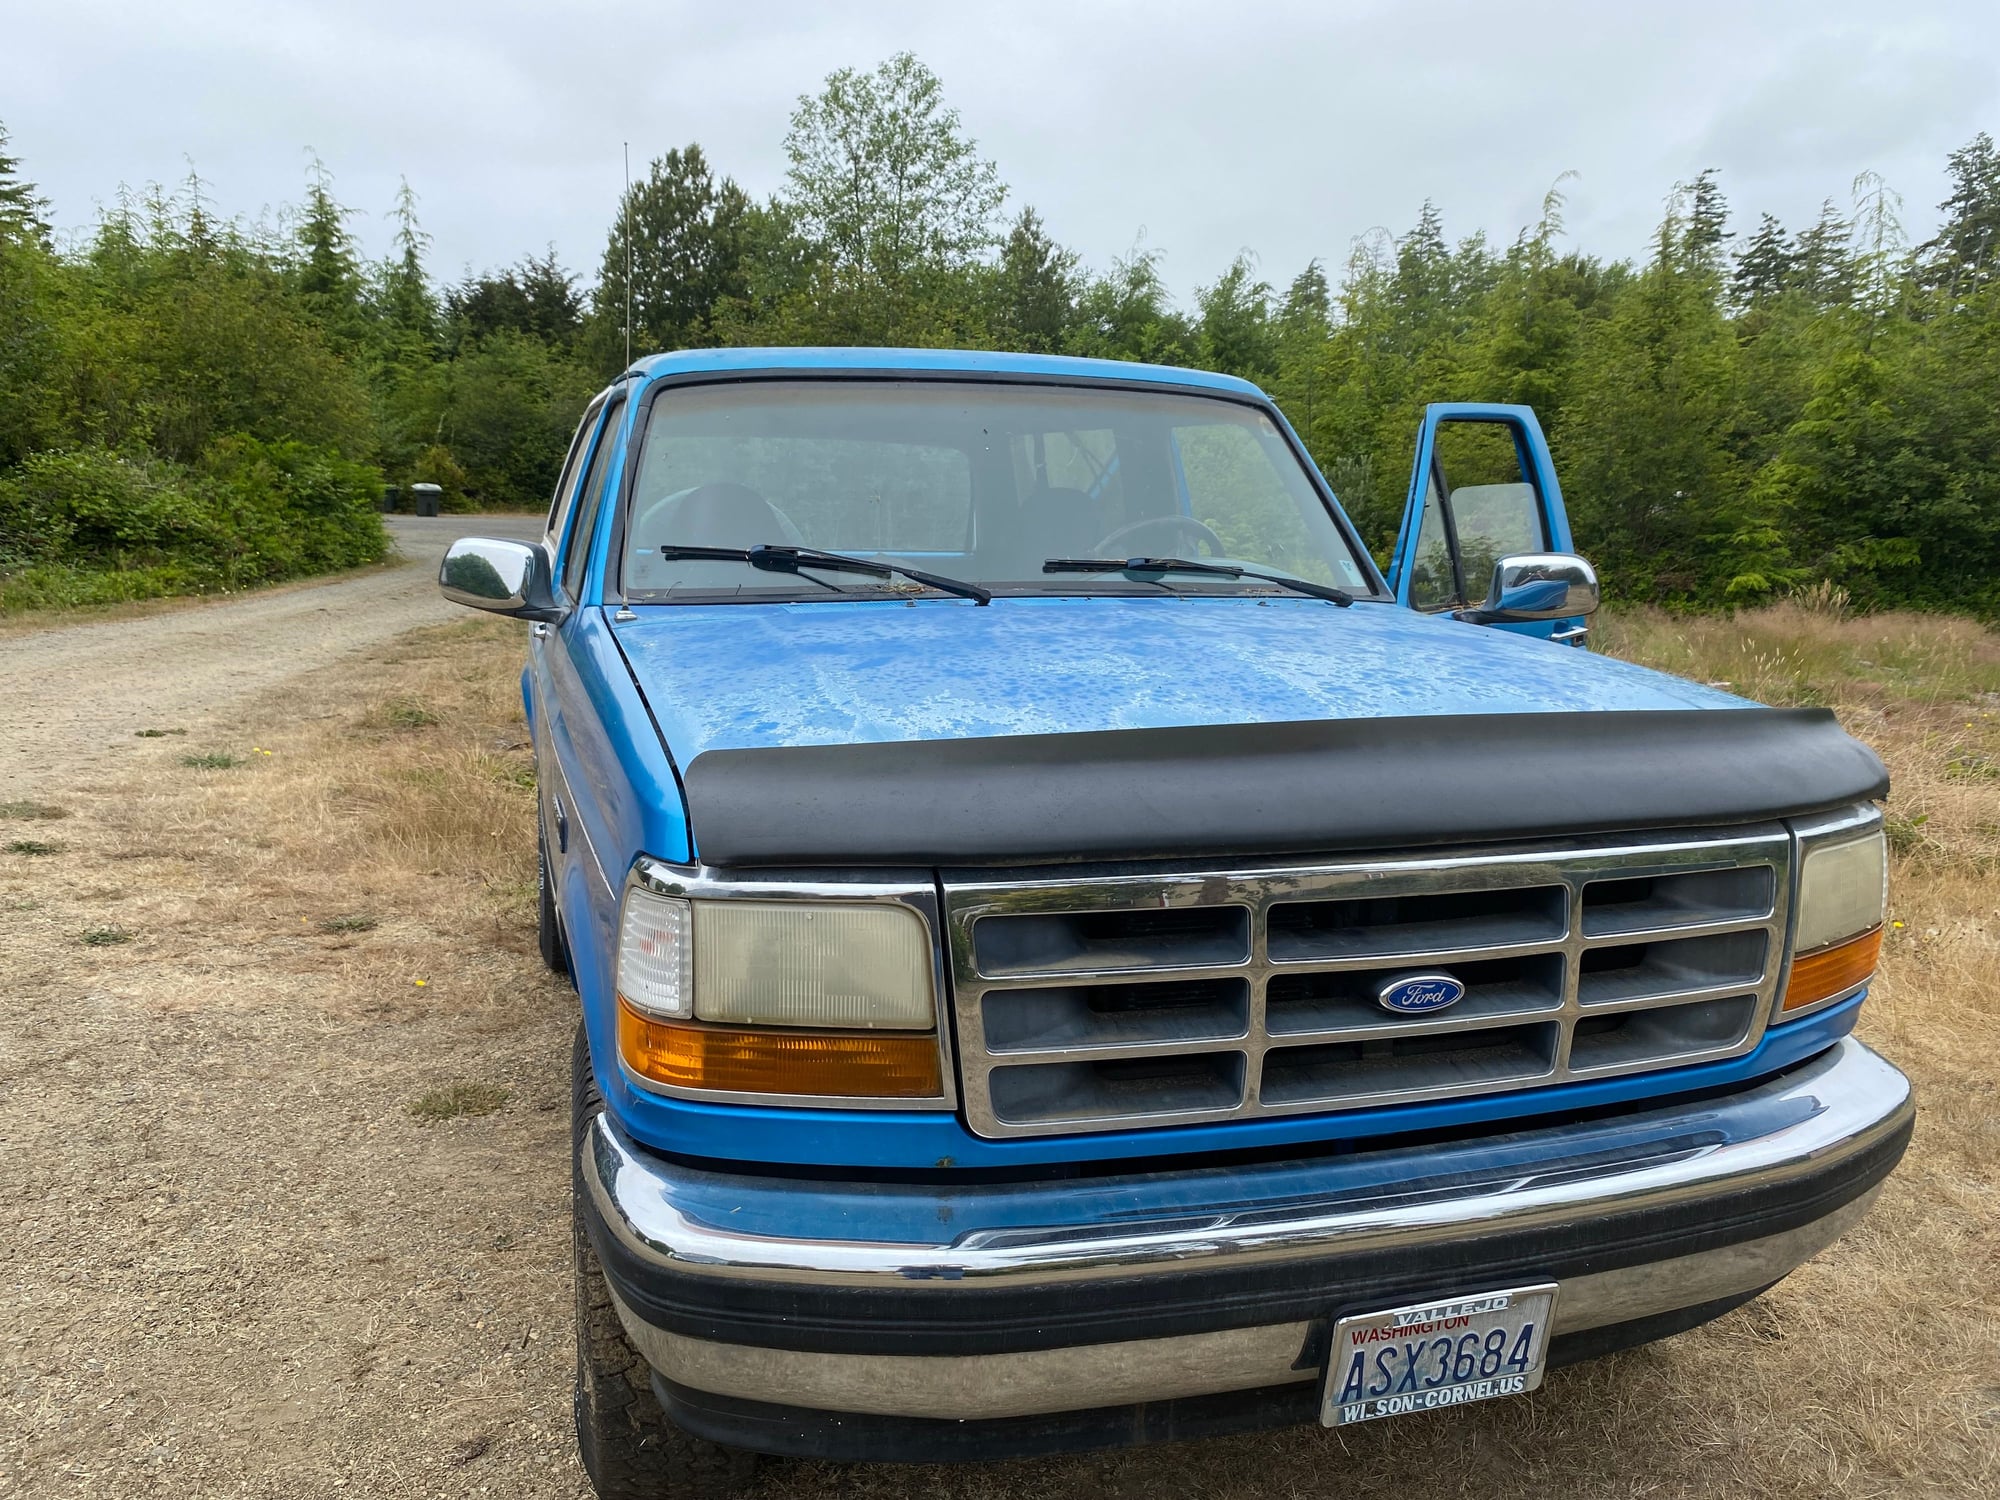 1995 Ford Bronco - All original Bronco XLT - Used - VIN 1FMEU15H85SLA6663 - 141,790 Miles - 8 cyl - 4WD - Automatic - SUV - Blue - Ocean Park, WA 98640, United States